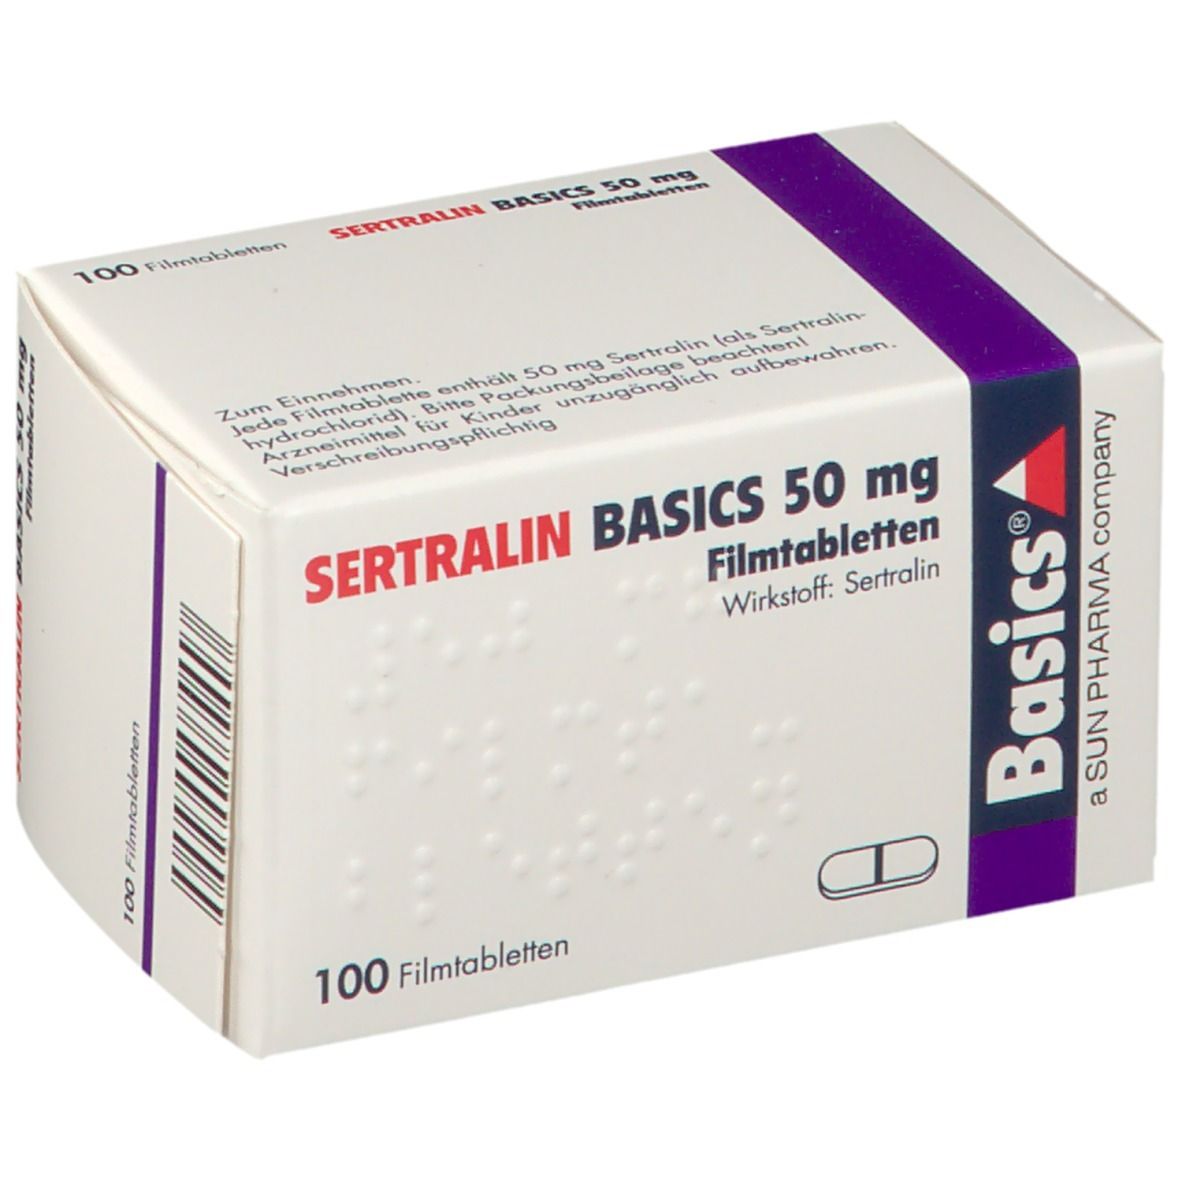 SERTRALIN BASICS 50 mg